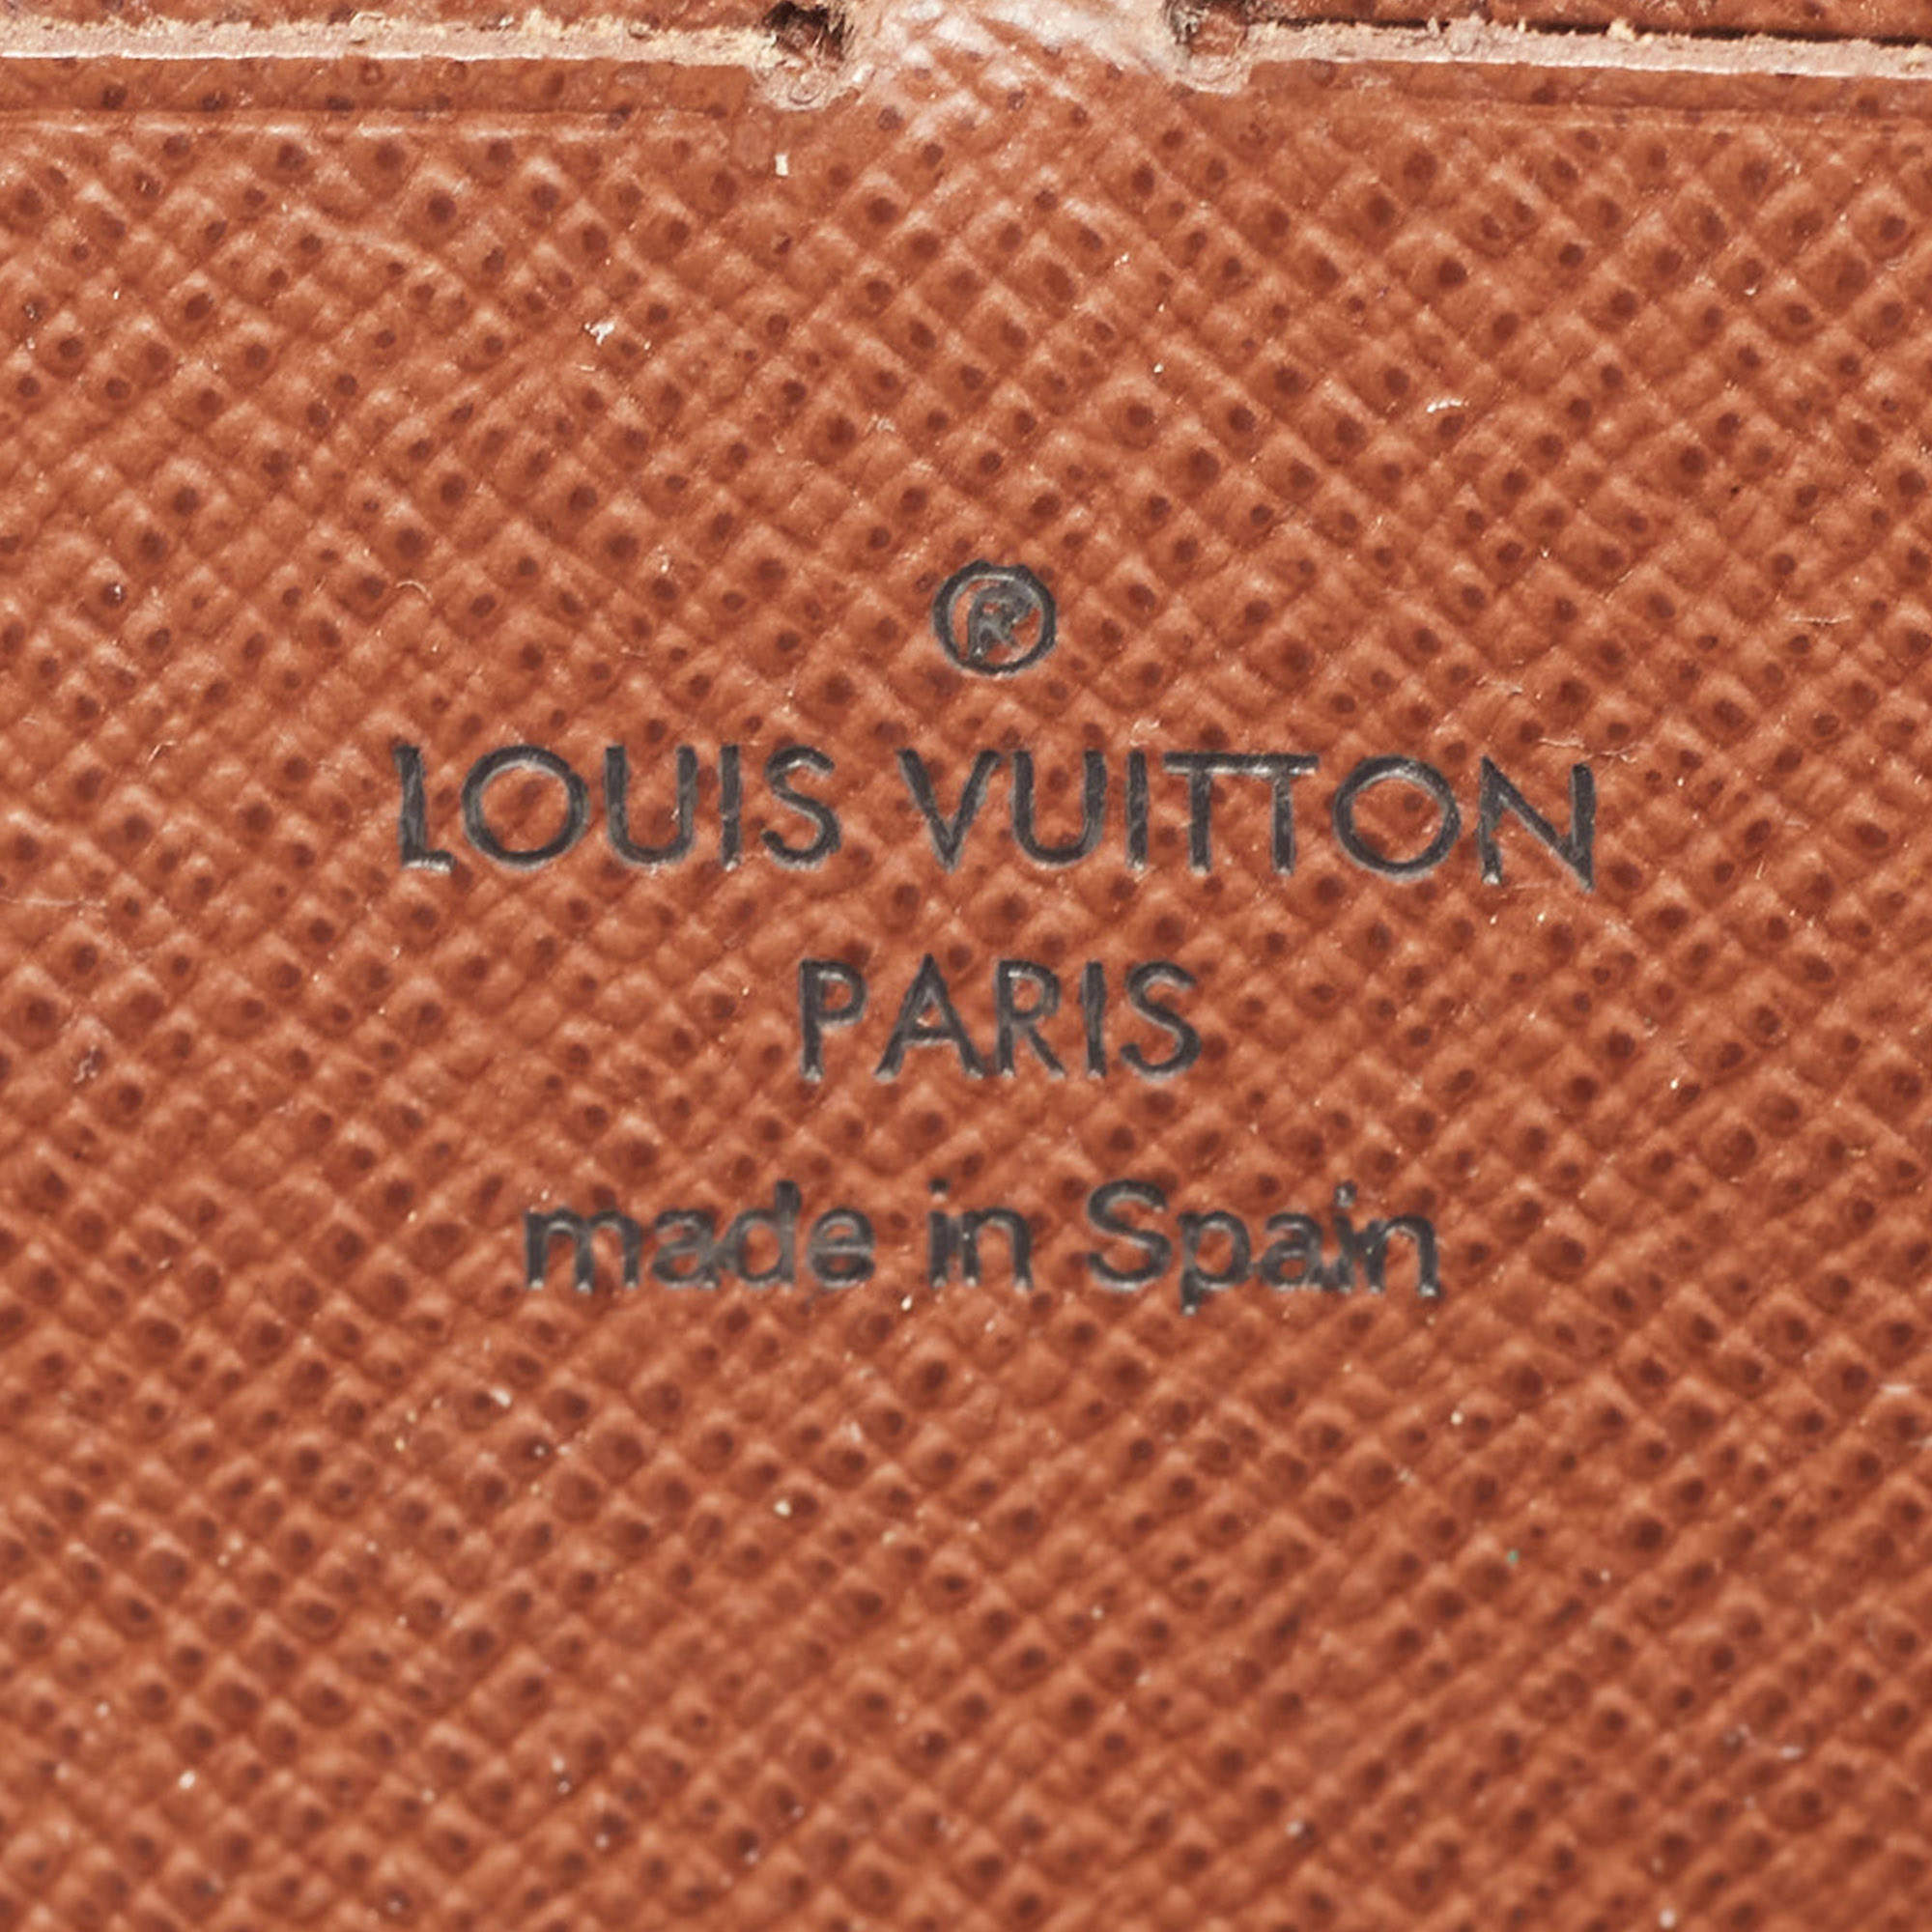 Authentic Louis Vuitton Men's Wallet Original Leather Made In Spain